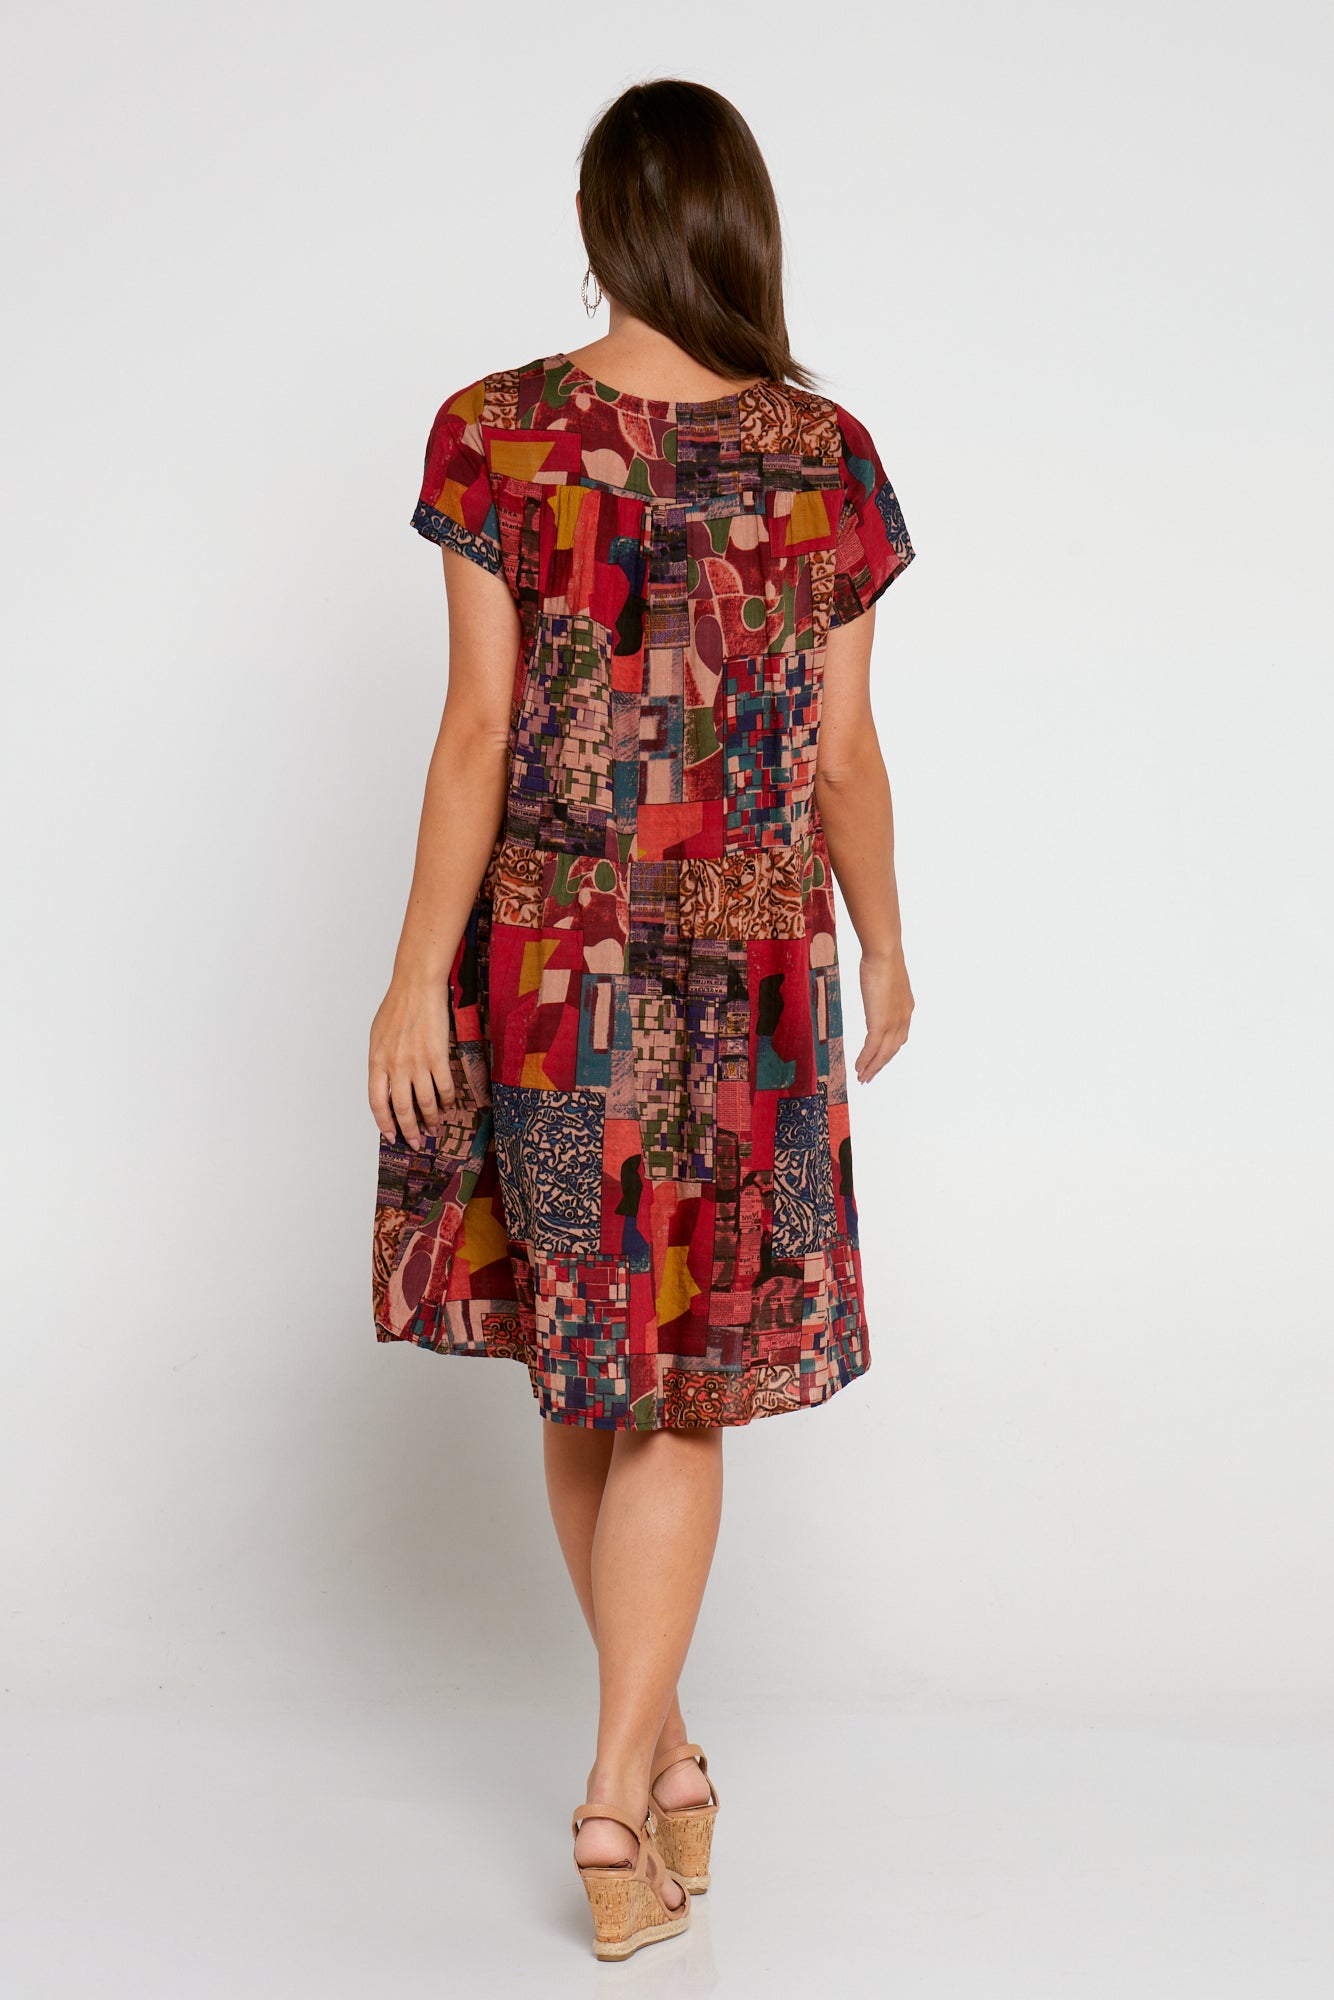 Emery Cotton Dress - Burgundy Collage